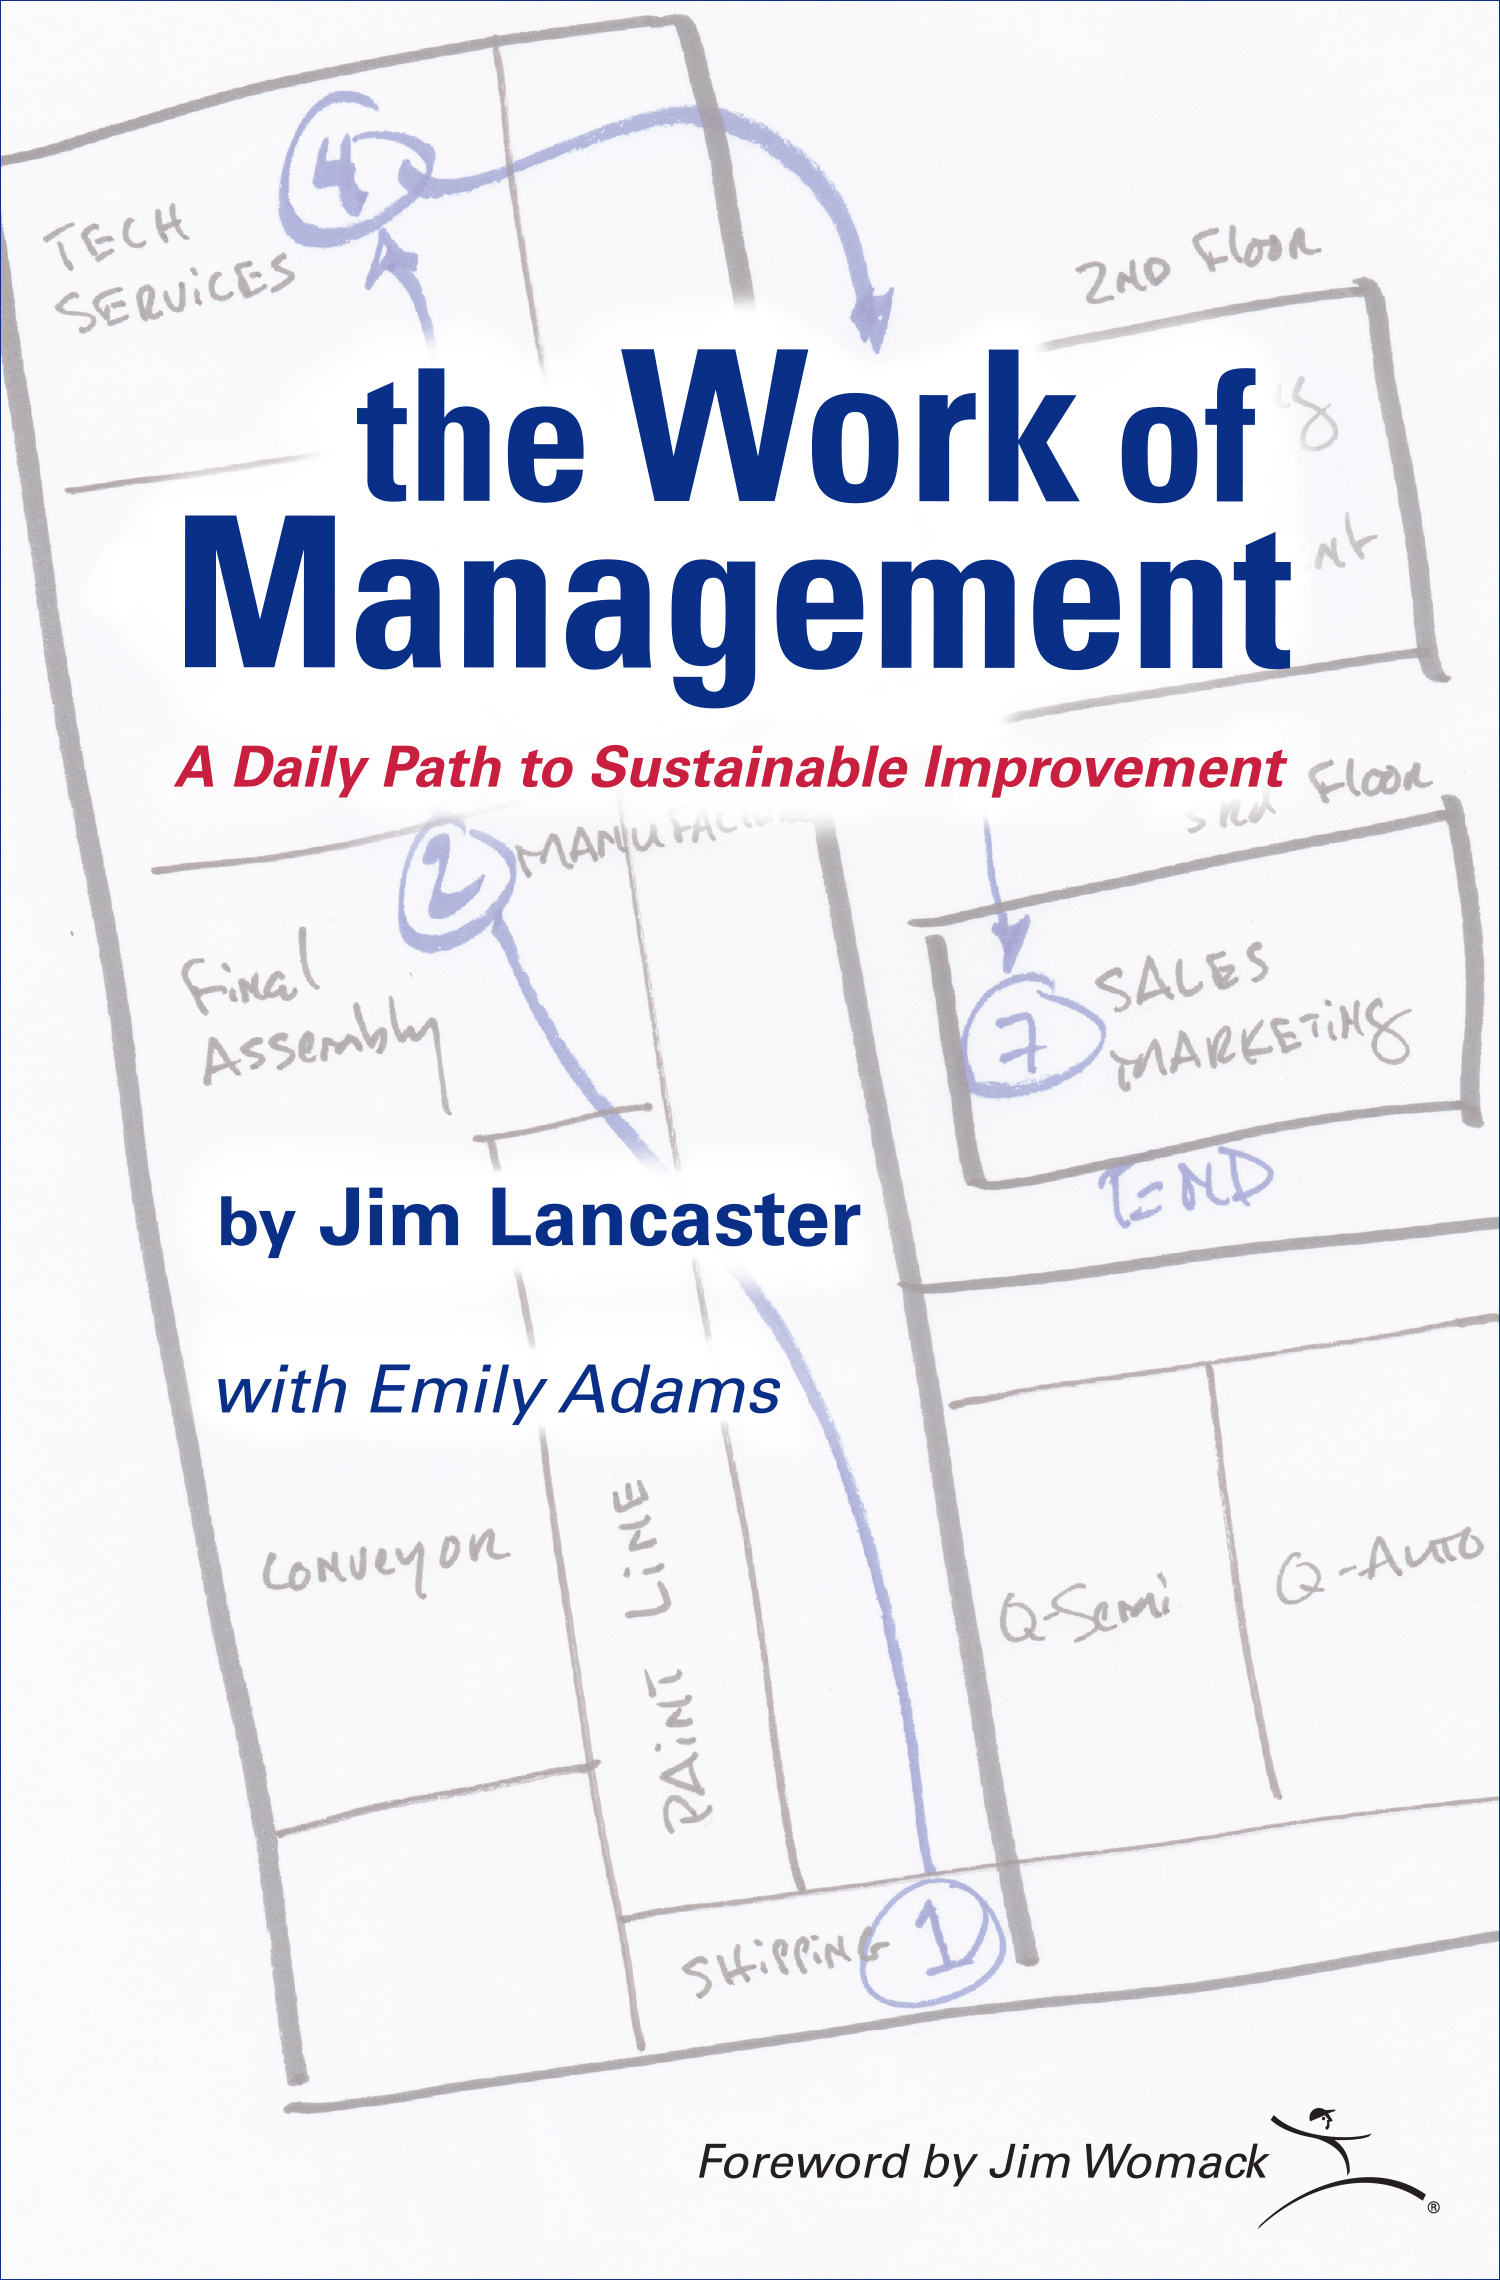 "Work of Management" Shingo Award book by Jim Lancaster.